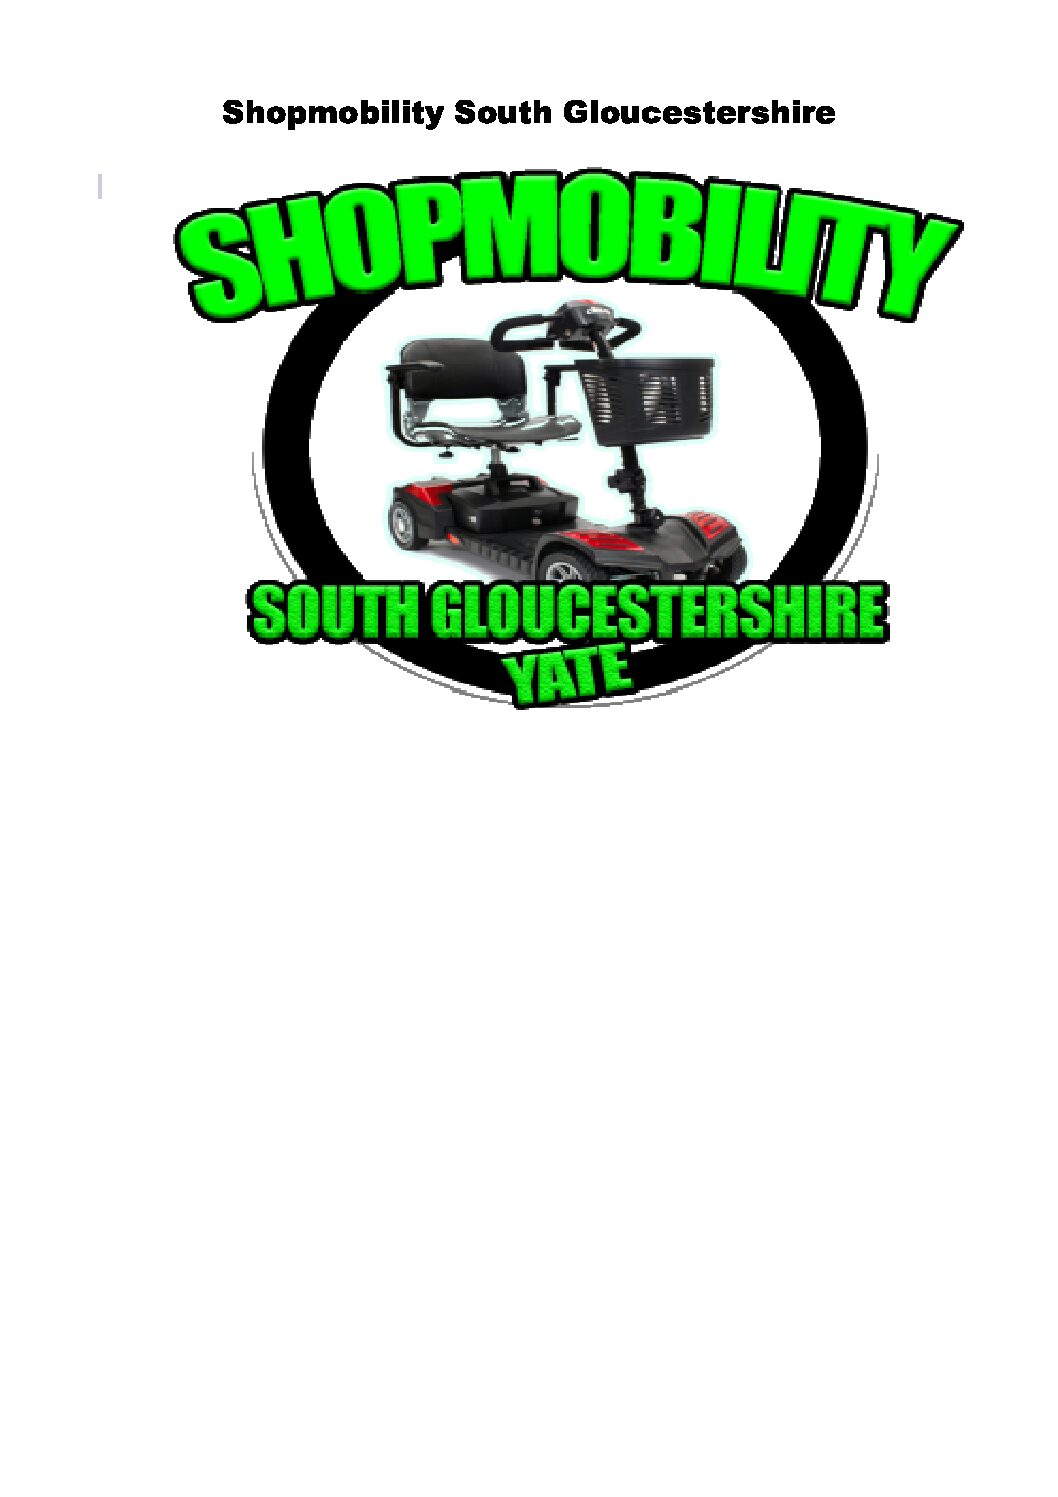 Shopmobility South Gloucestershire (Based at Yate)